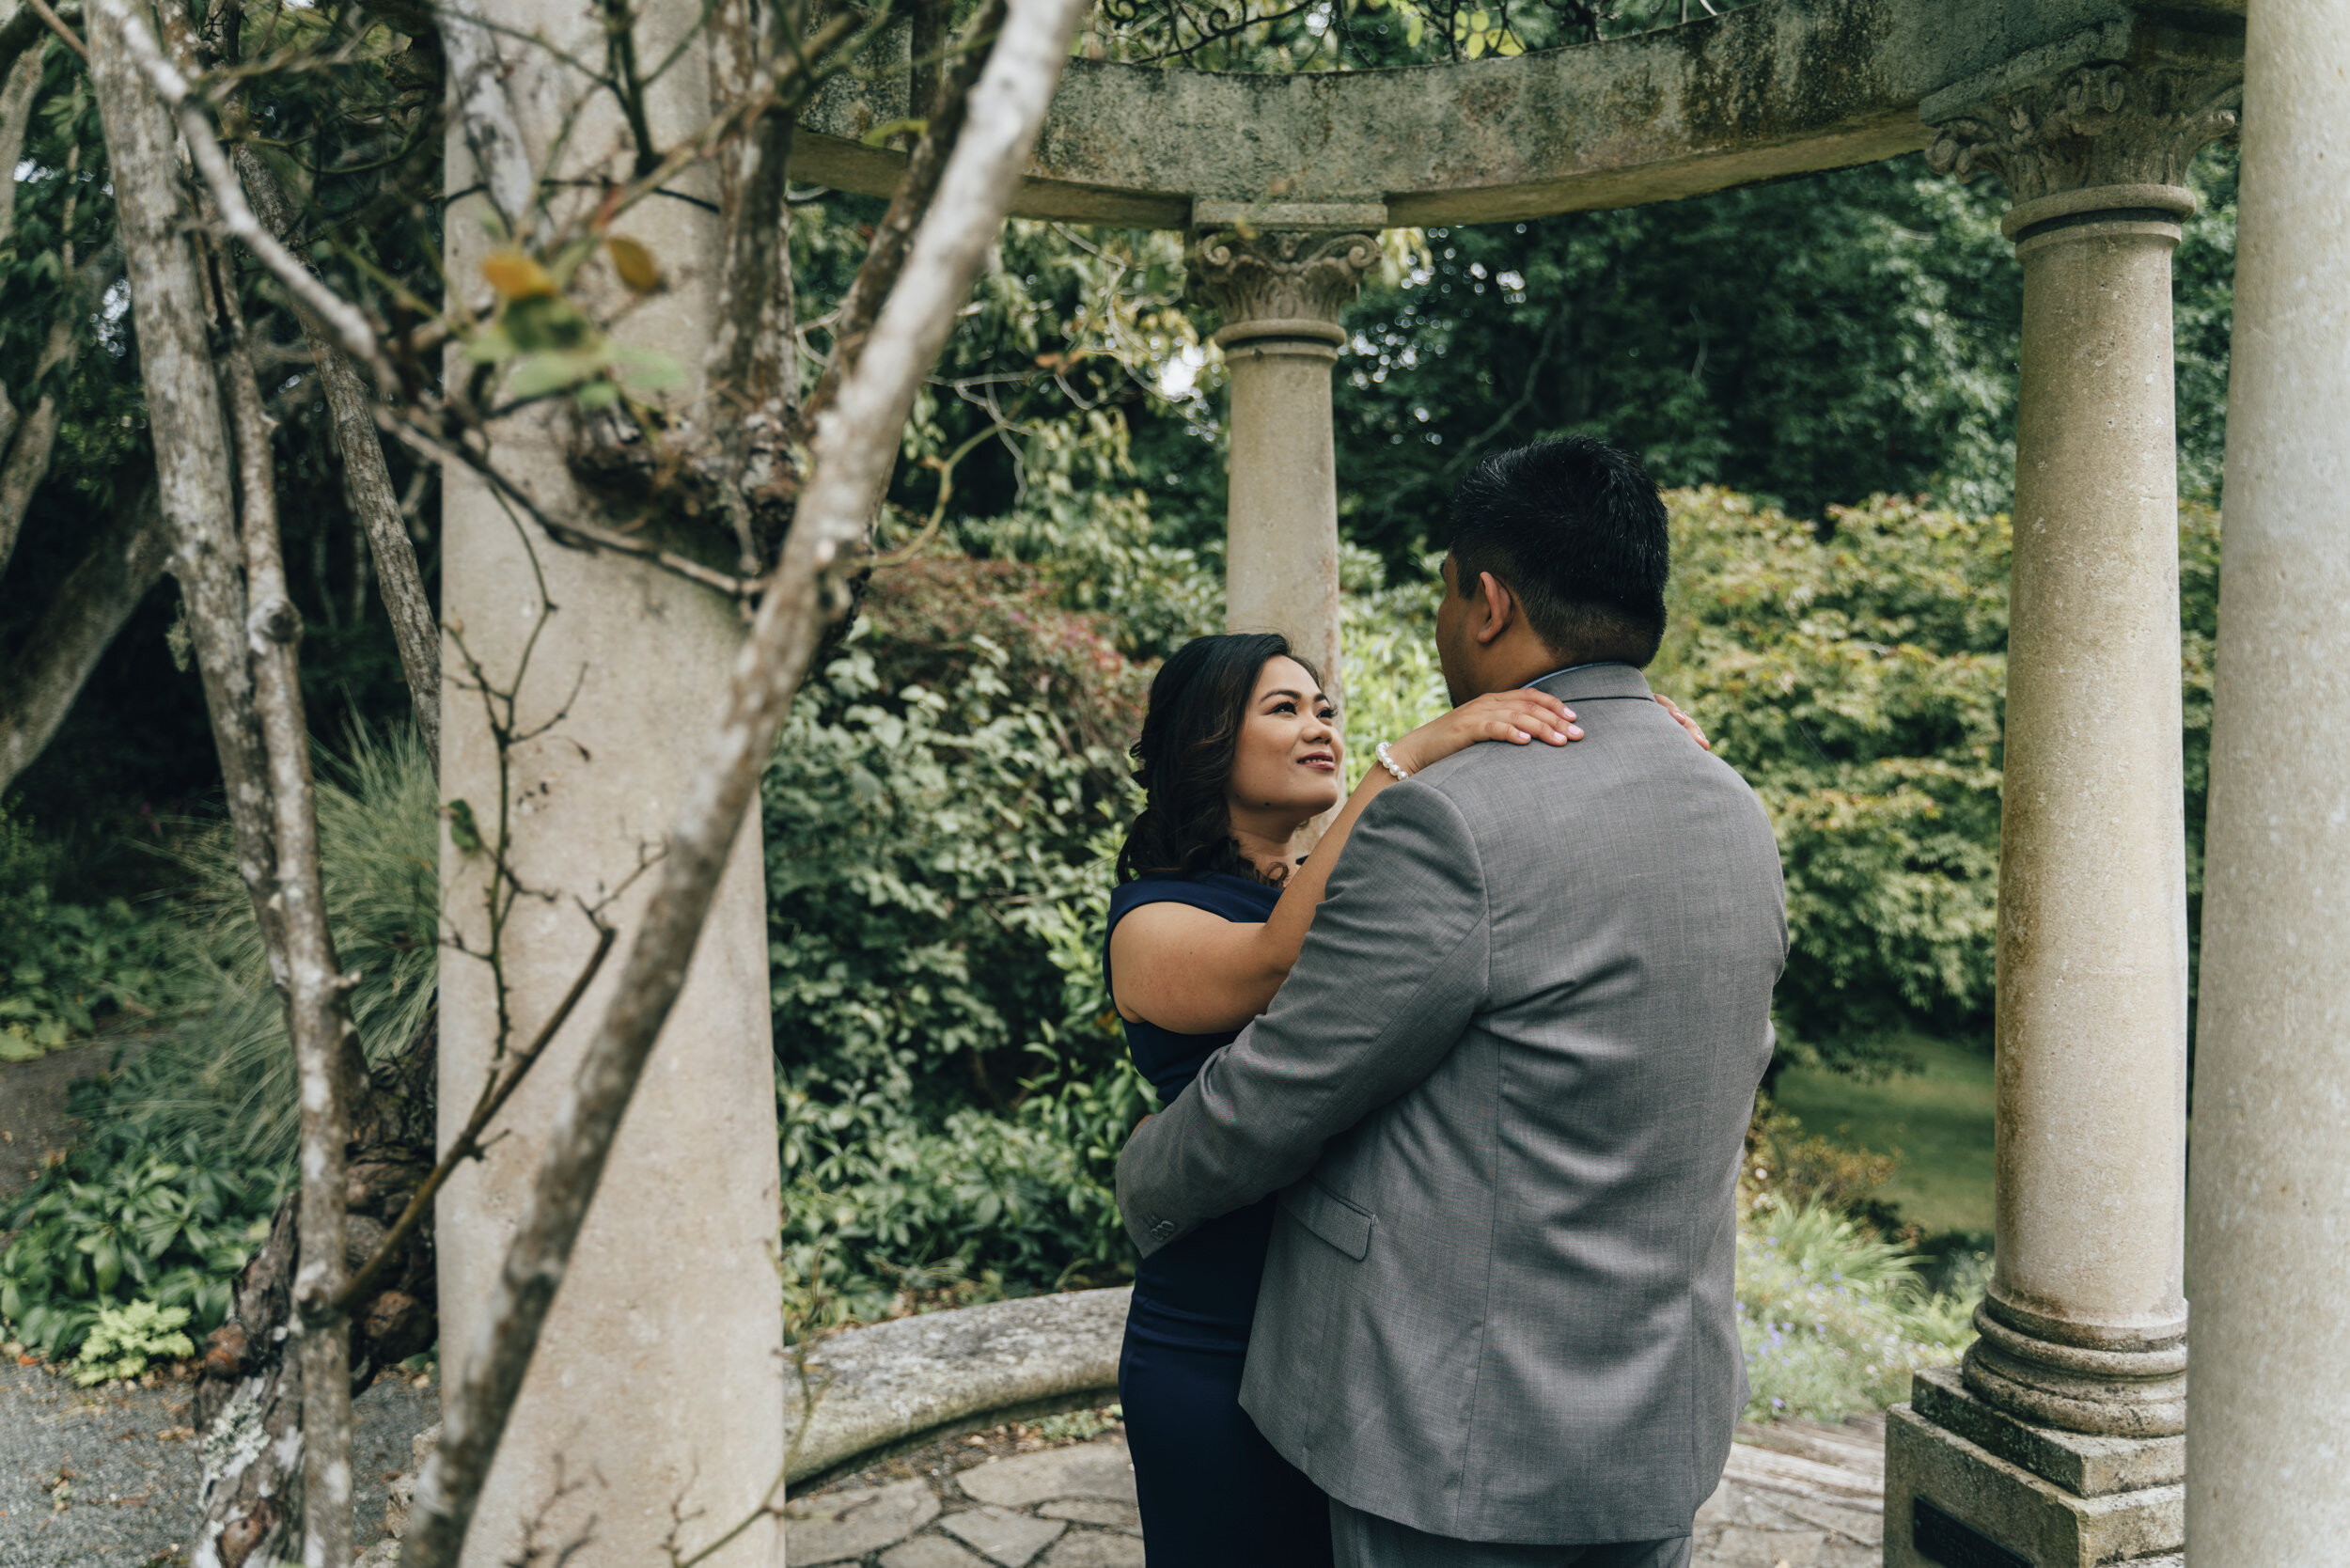 Auckland Wedding Photographer | Auckland Engagement Photographer | Ayrlies Garden Wedding | Forest Wedding | Forest Elopement | Auckland Forest Wedding Venue